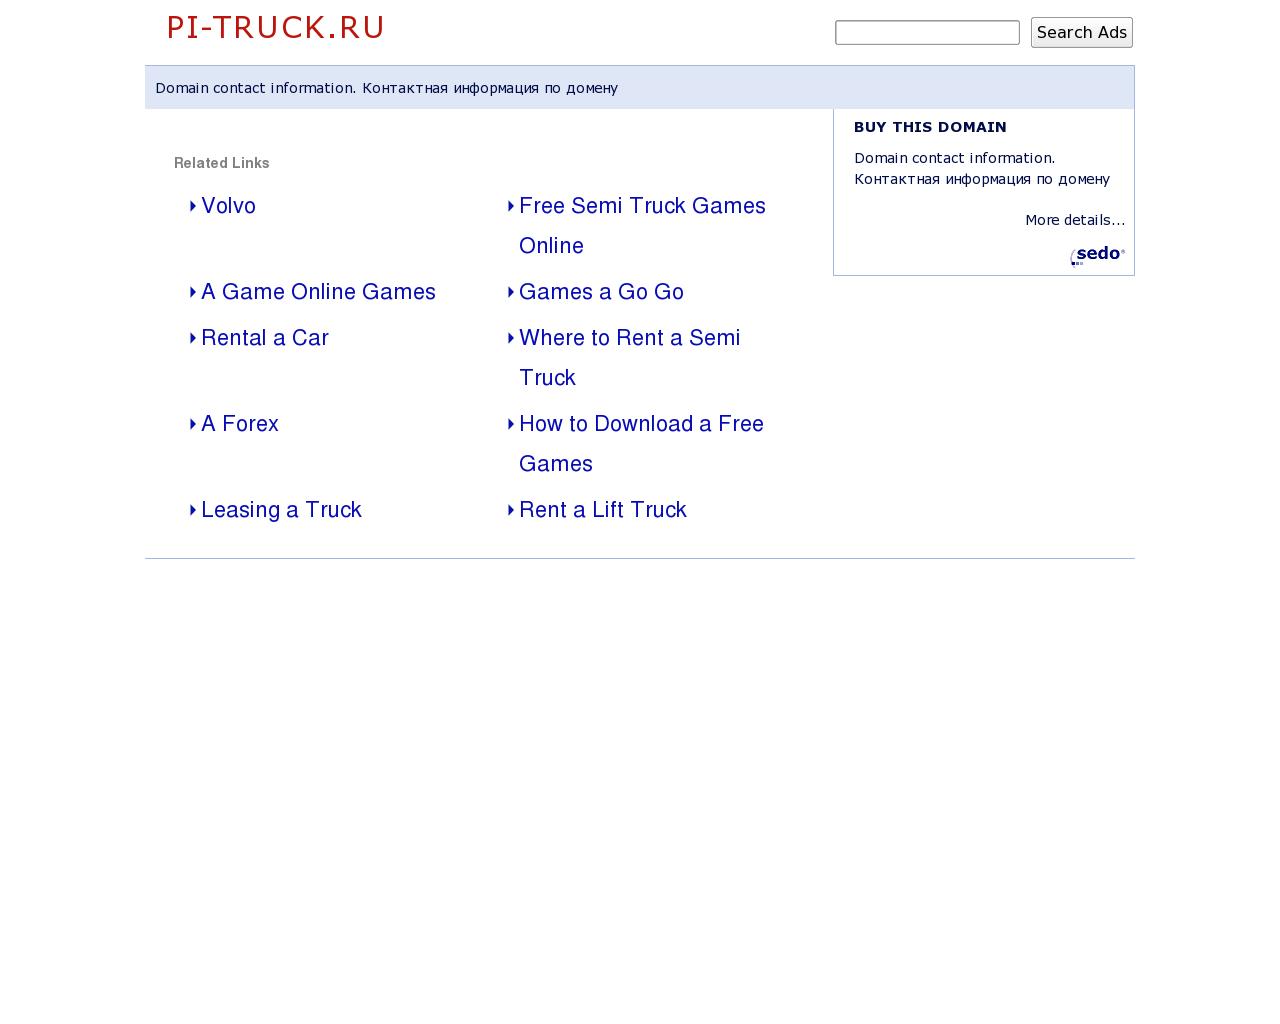 Изображение сайта pi-truck.ru в разрешении 1280x1024